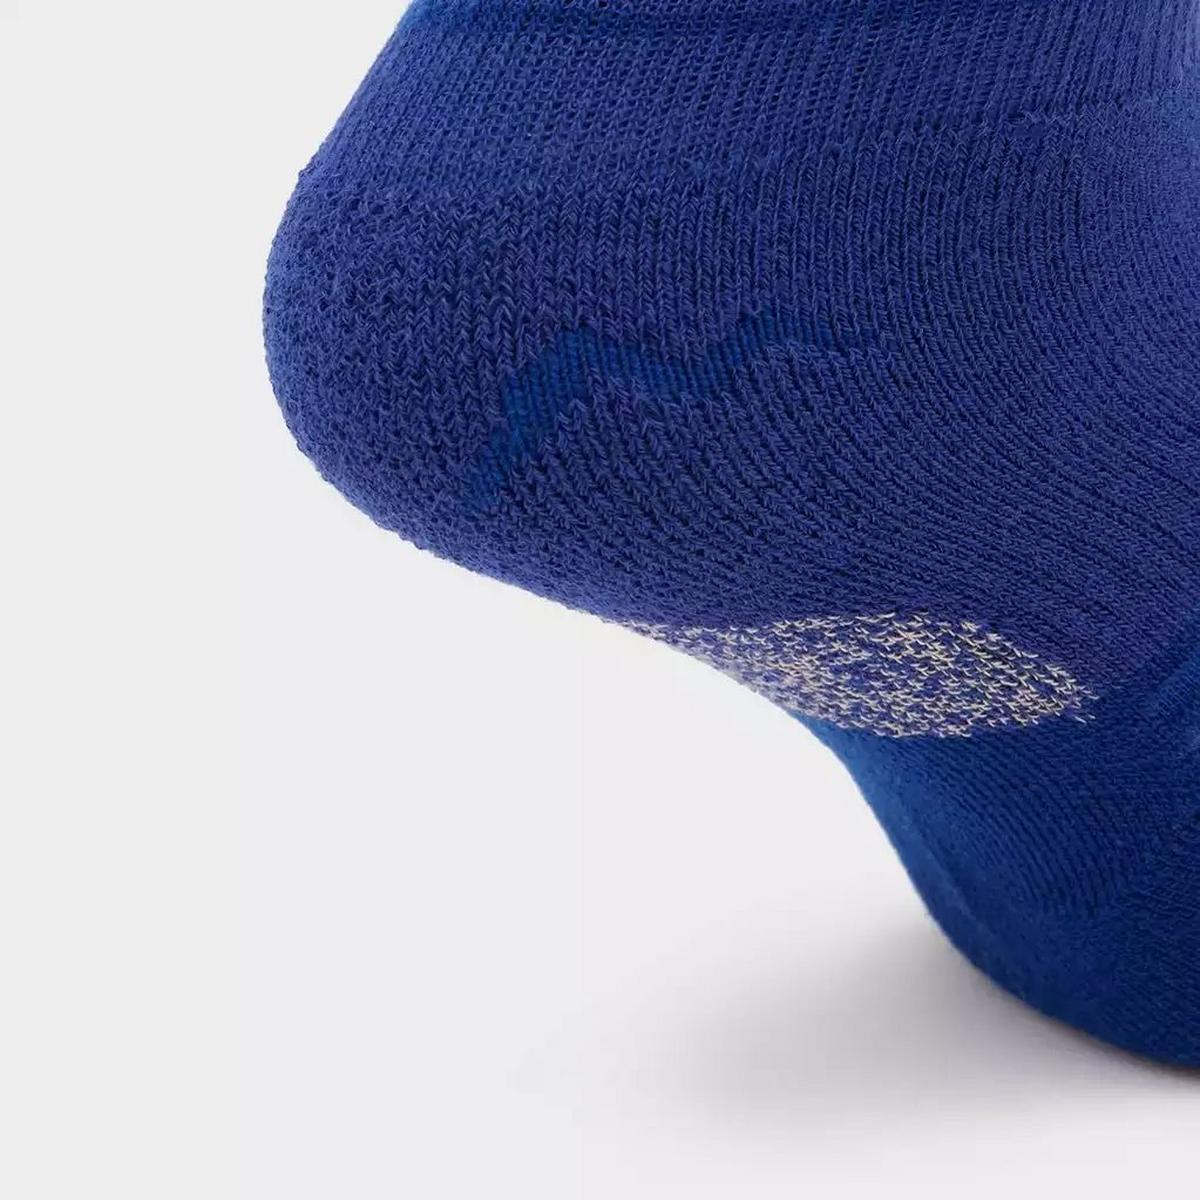 Peter Storm Kids Midweight Socks 2-Pack - Blue